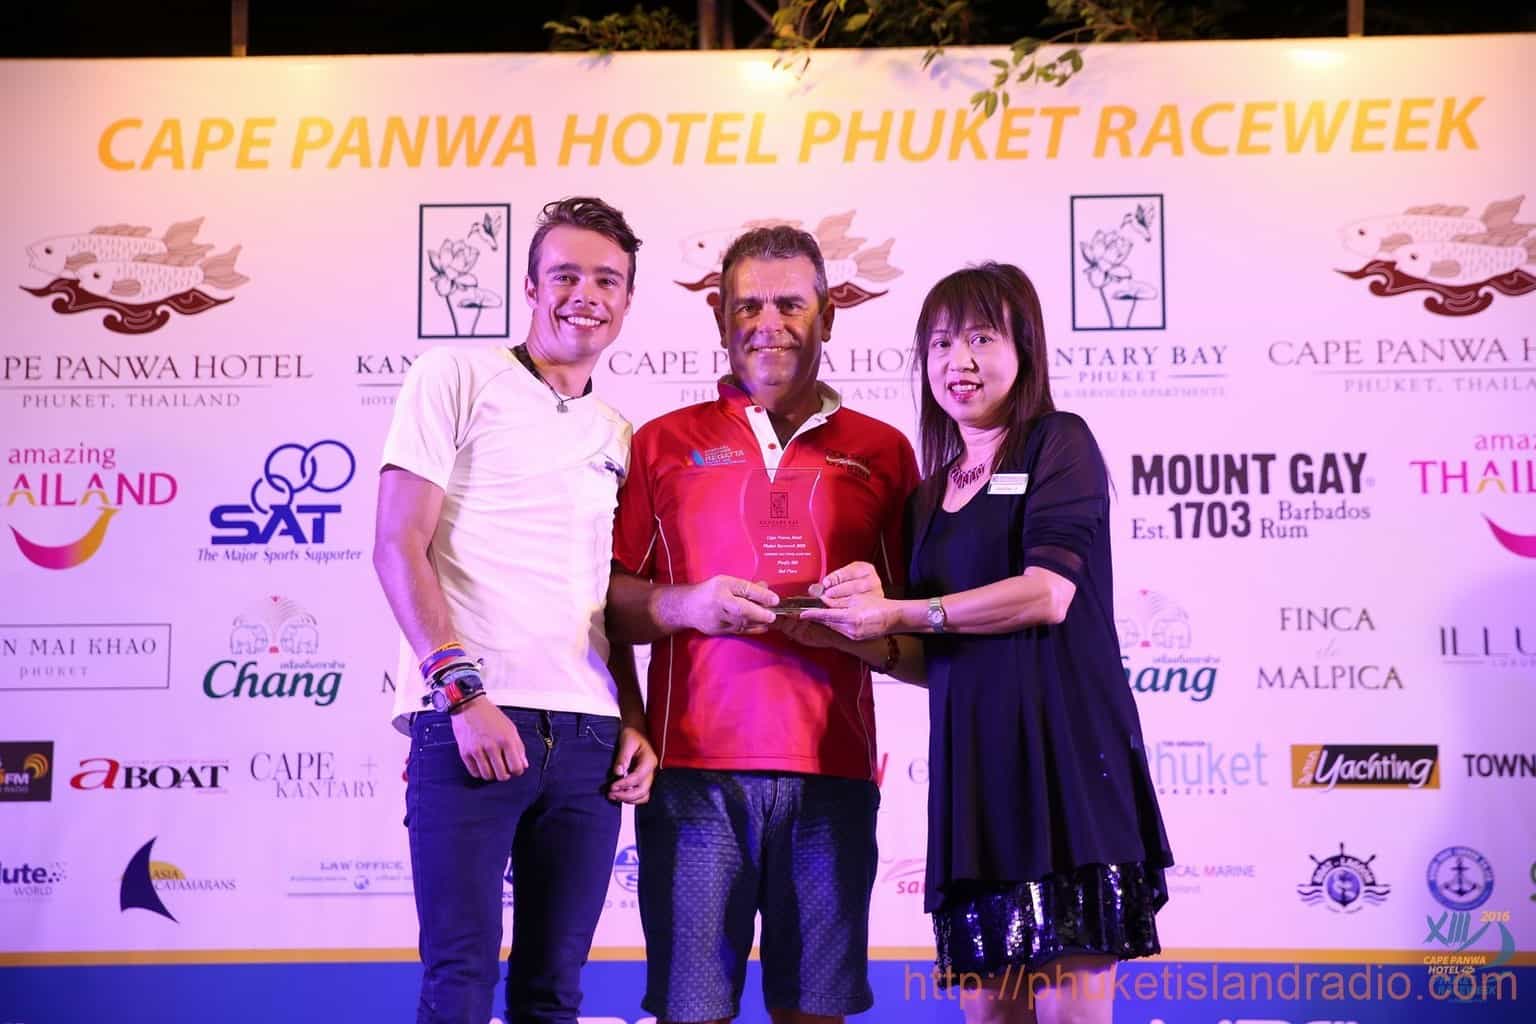 Raceday-two-awards-presented-by-Kantary-Bay-Hotel-Phuket182